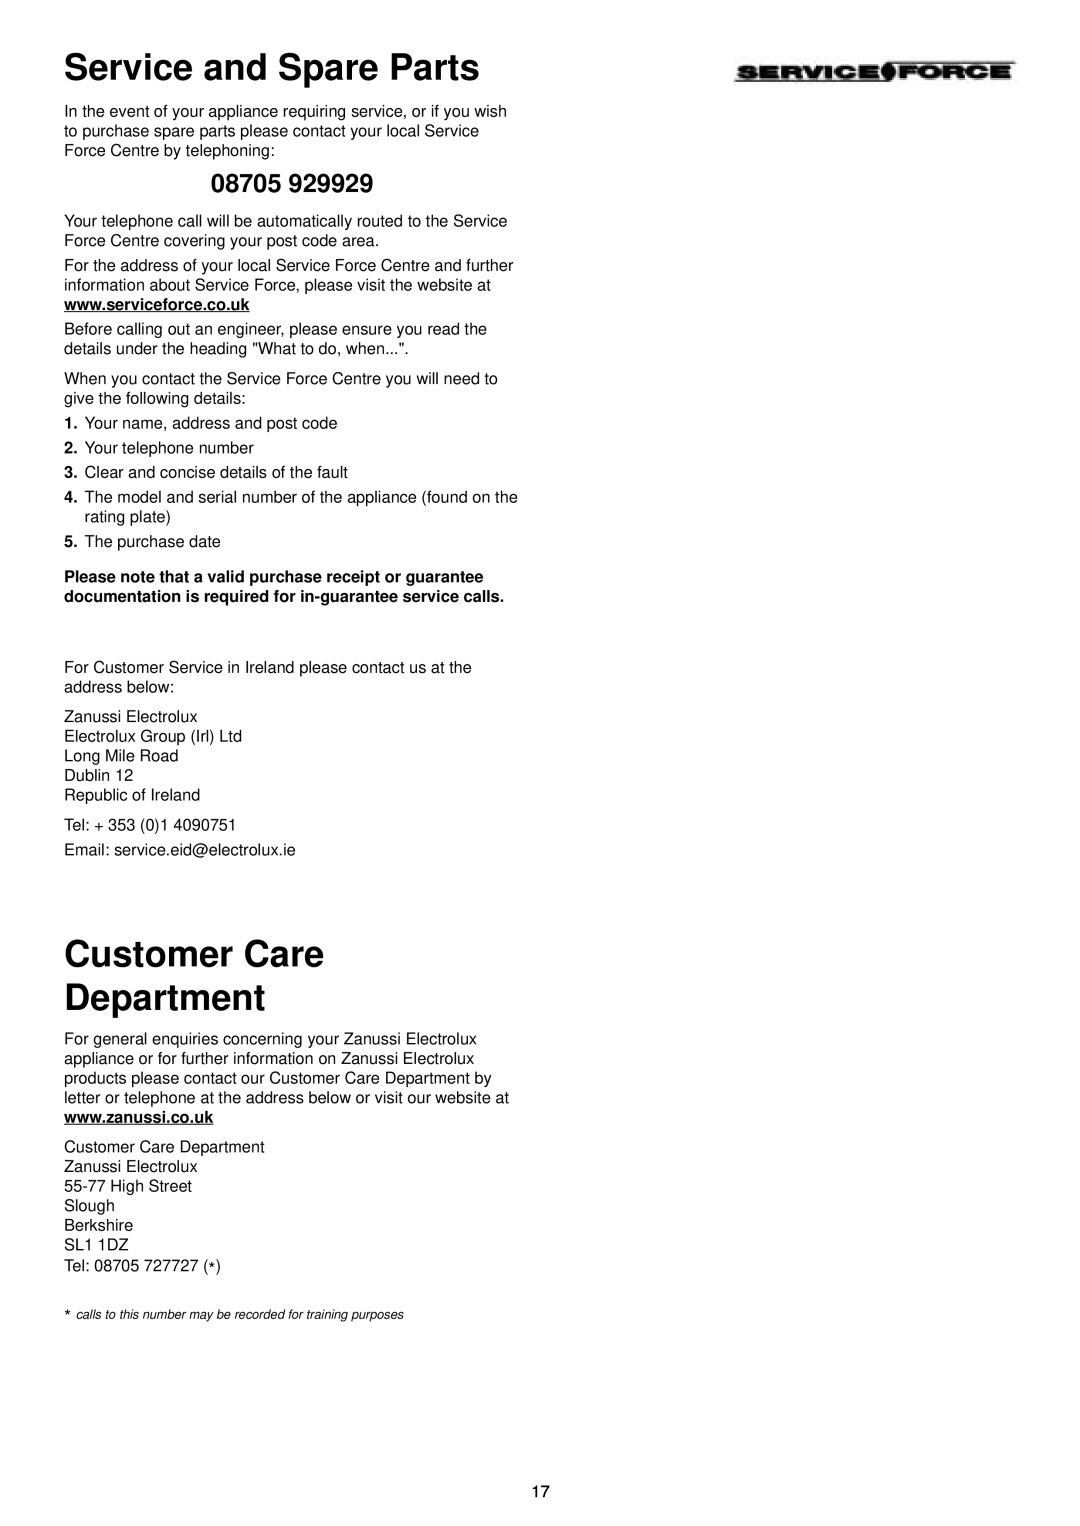 Zanussi DE 6855 manual Service and Spare Parts, Customer Care Department, 08705 